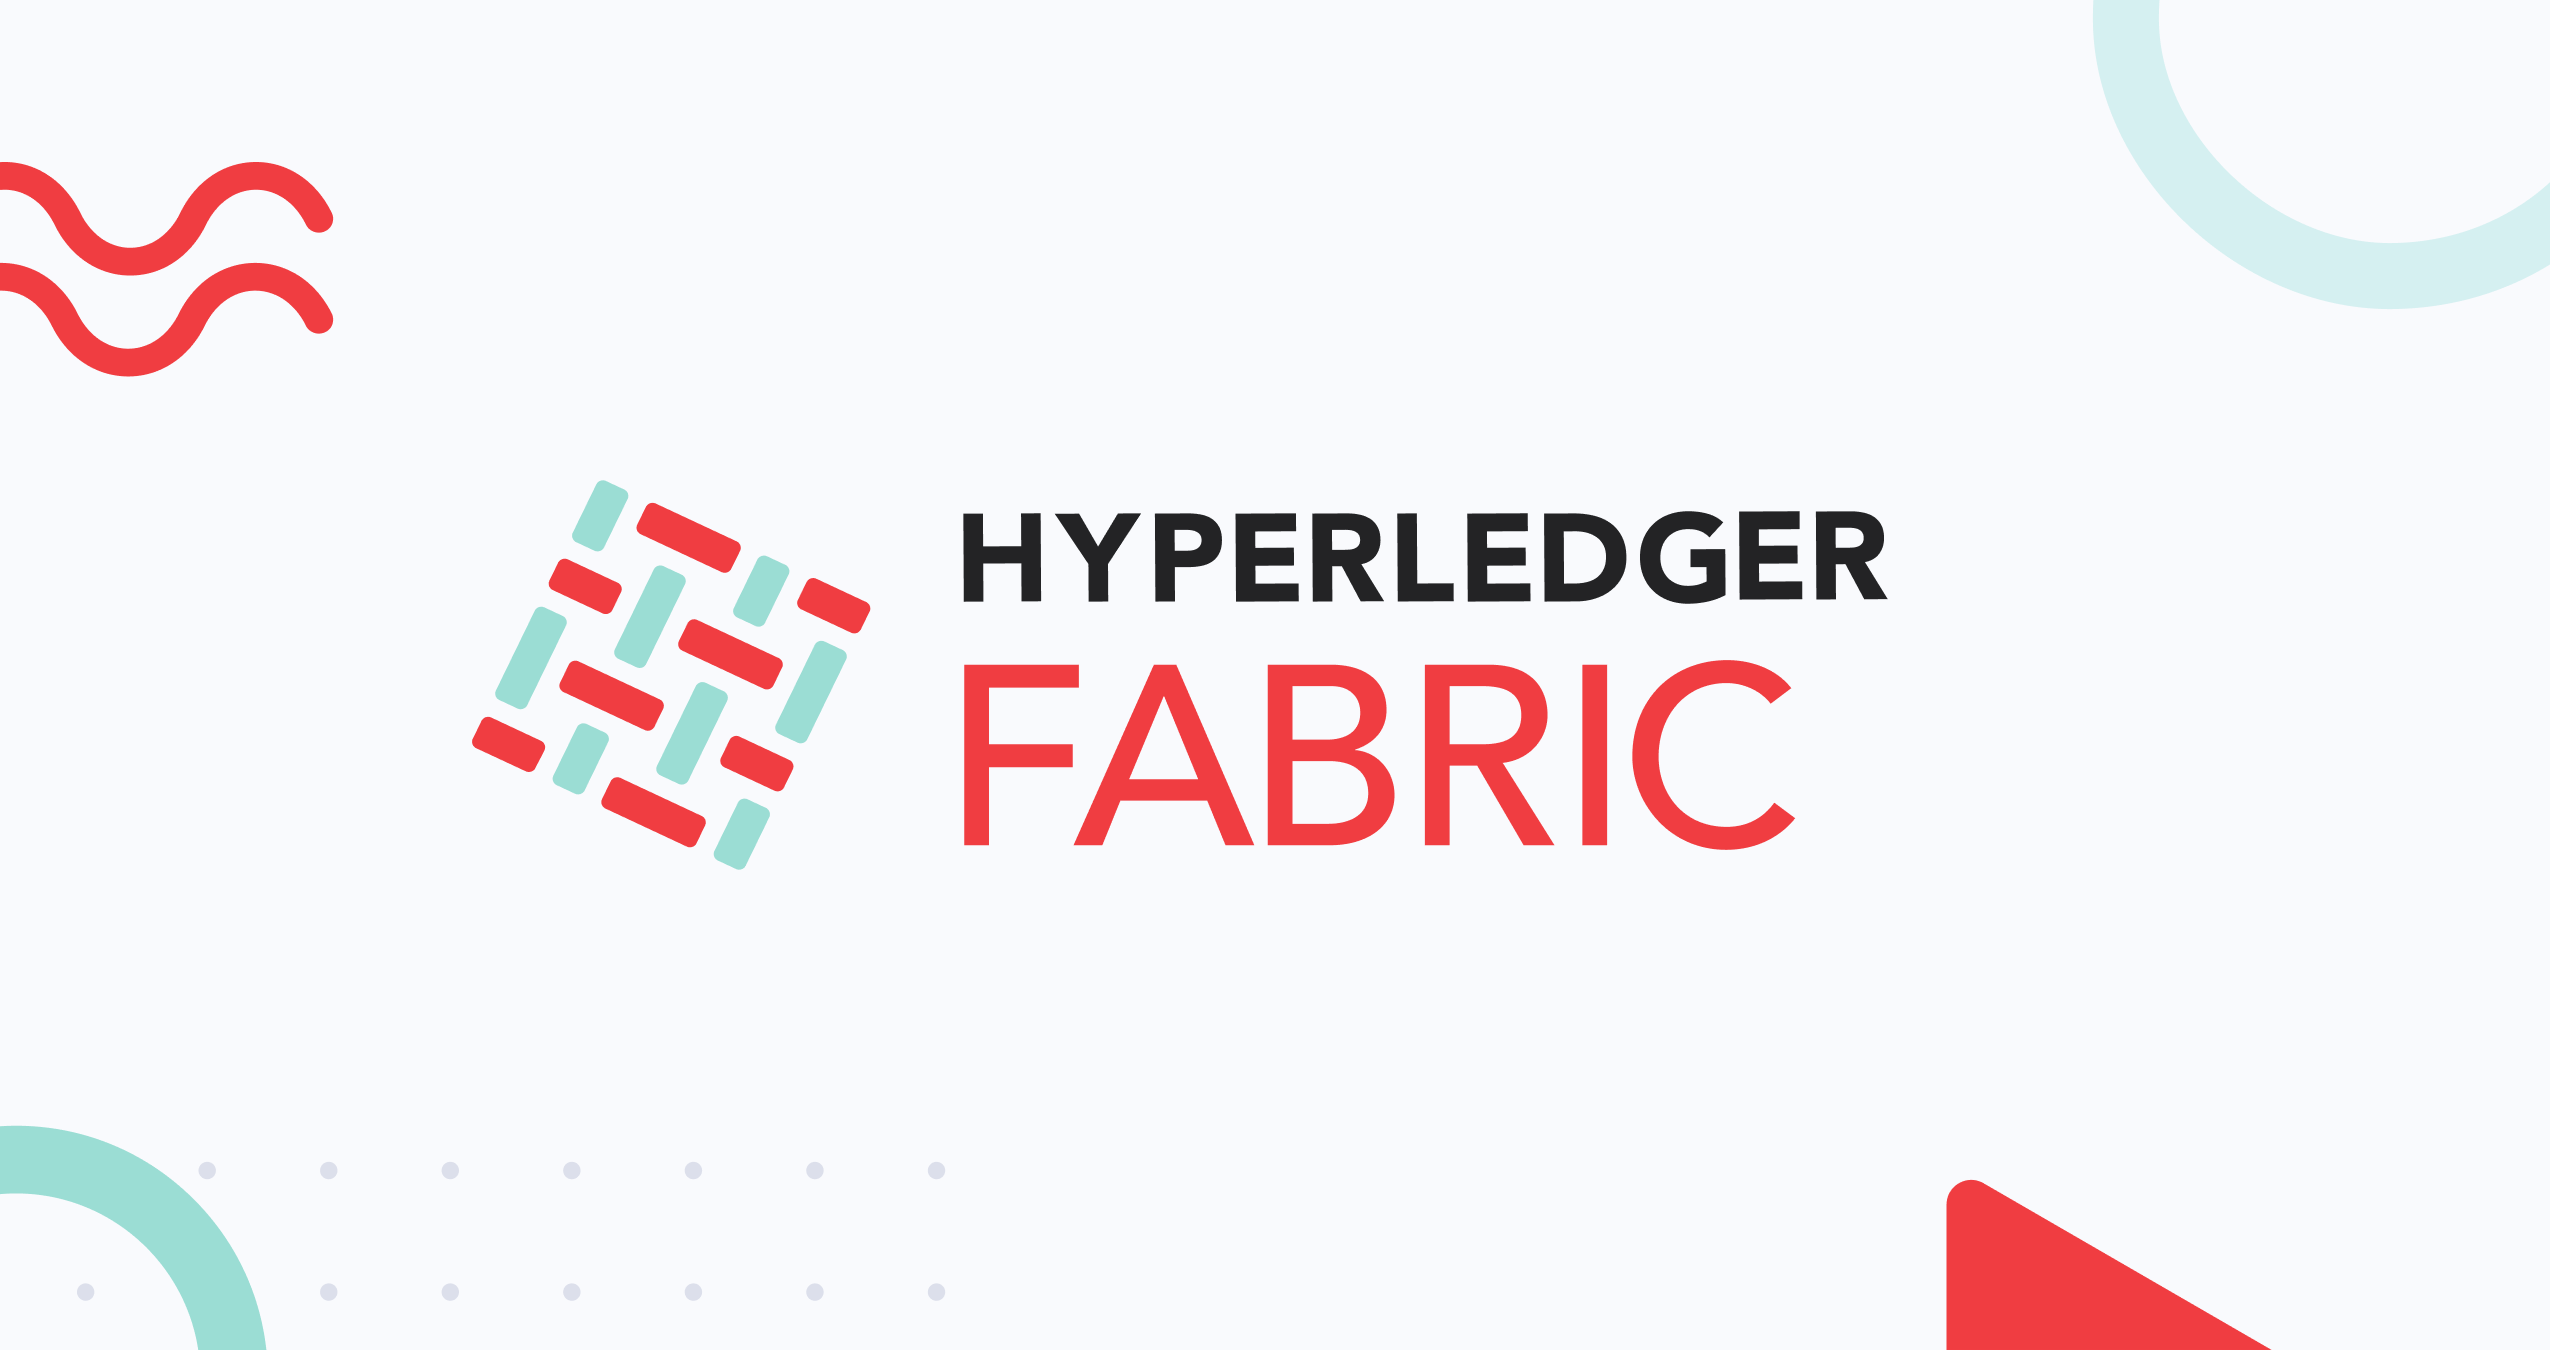 هایپرلجر فابریک(Hyperledger Fabric)